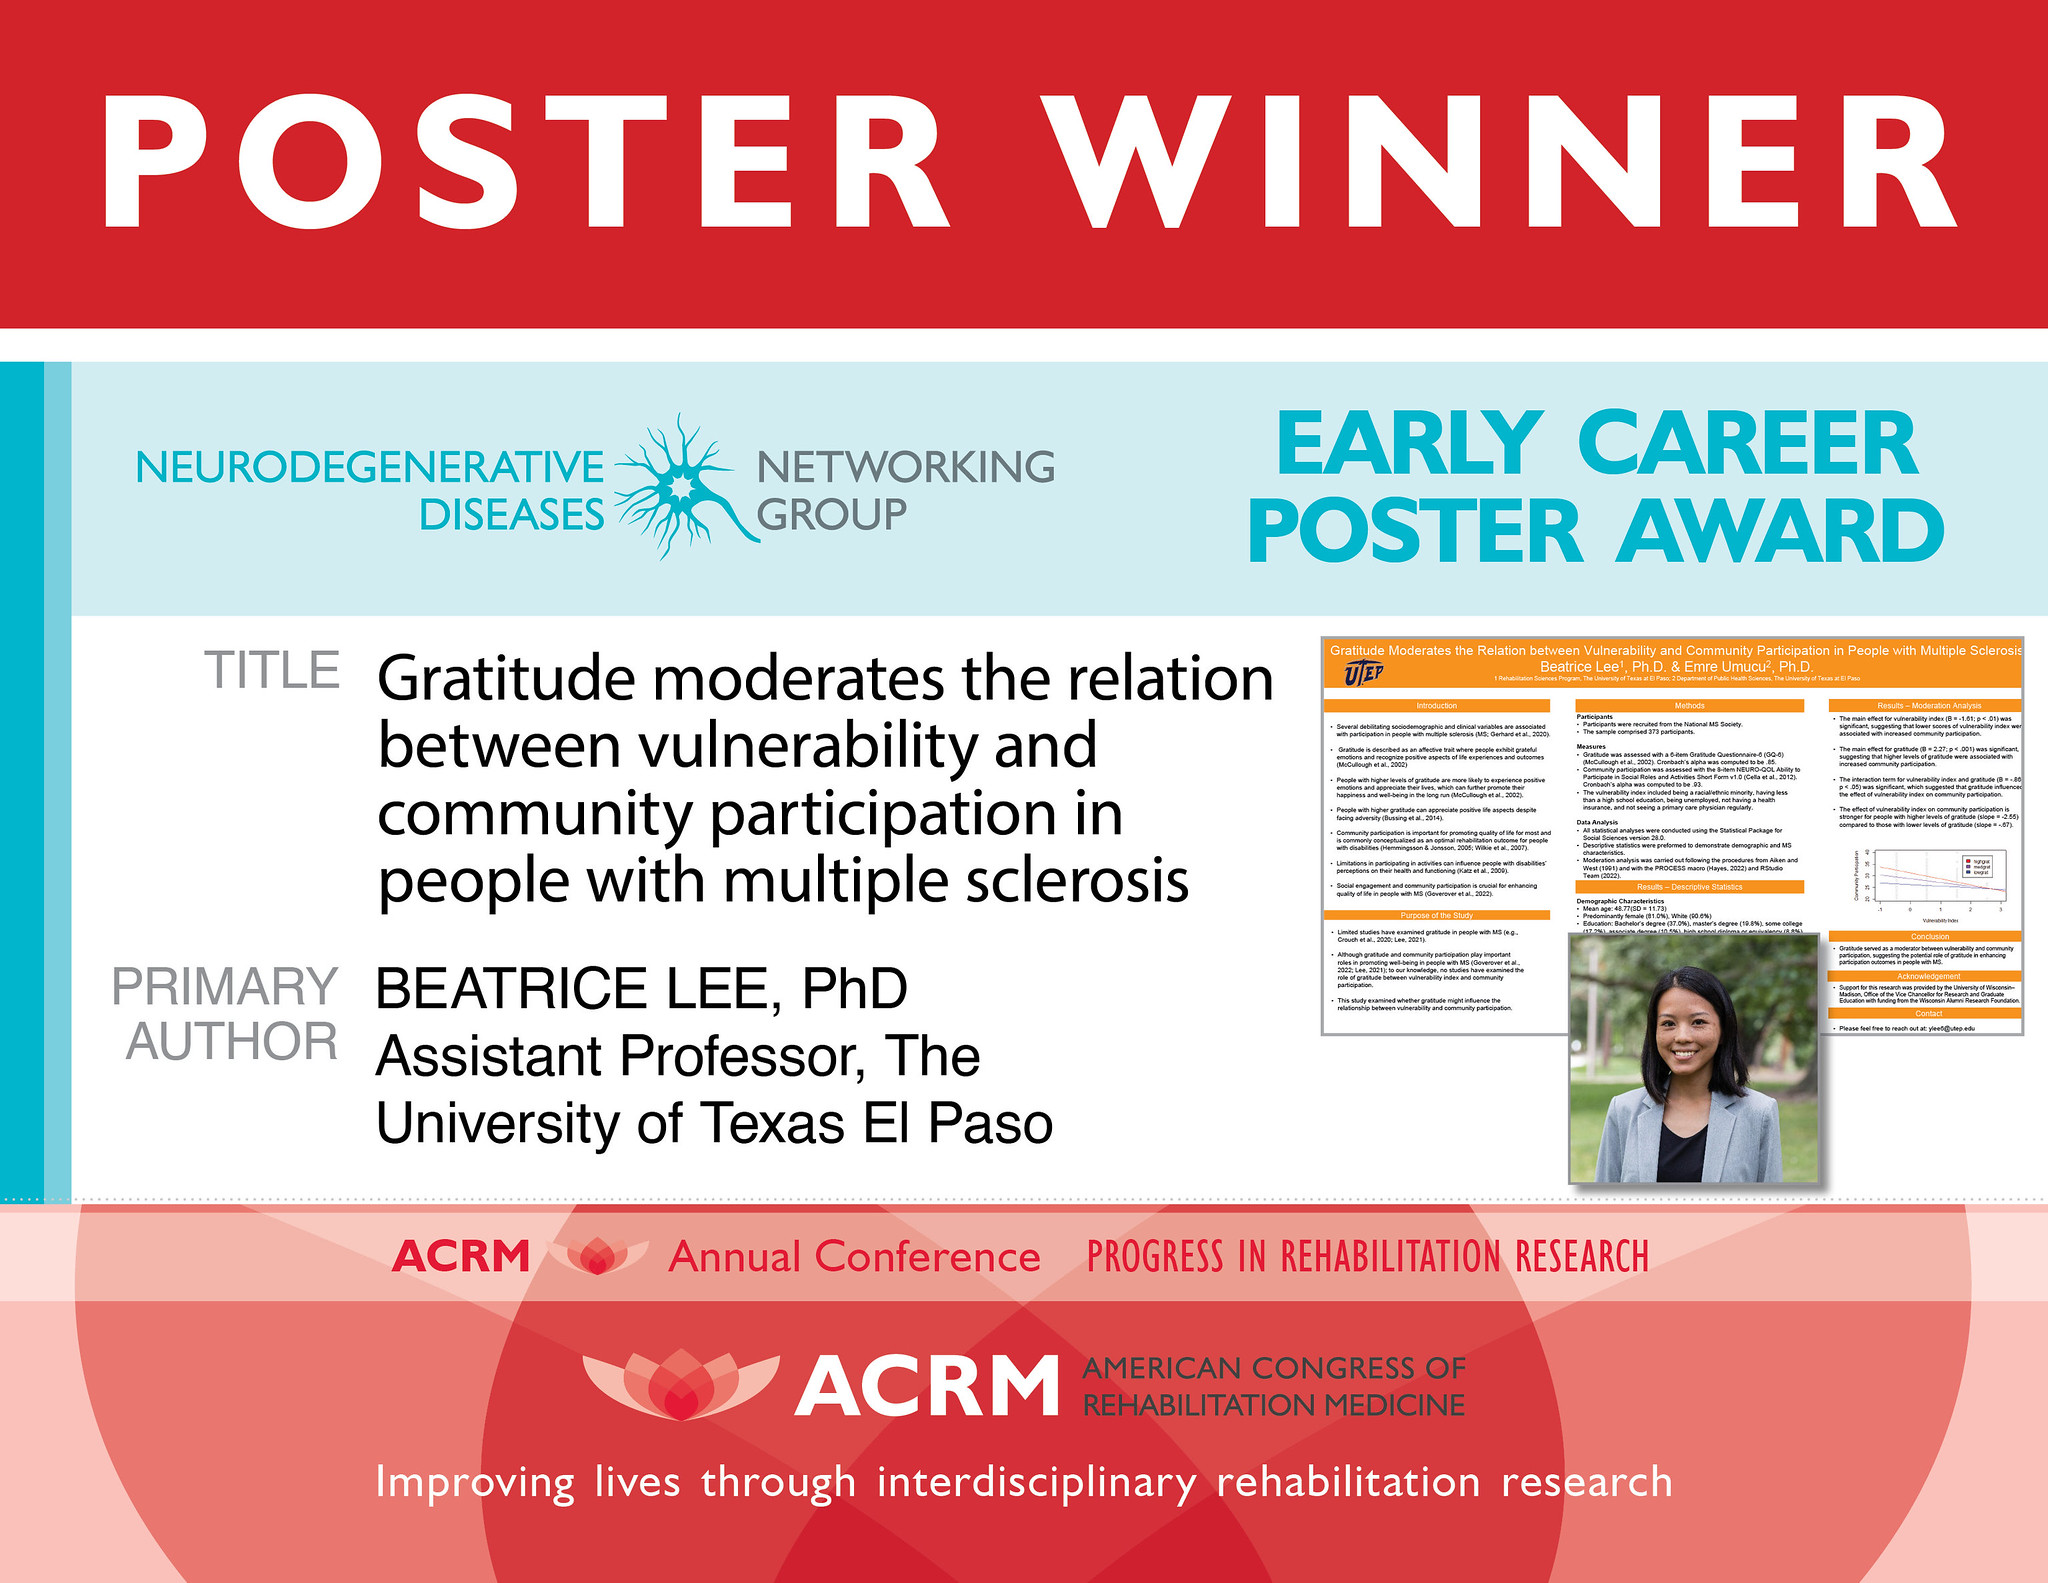 Neurodegenerative Diseases NG Early Career Poster Award